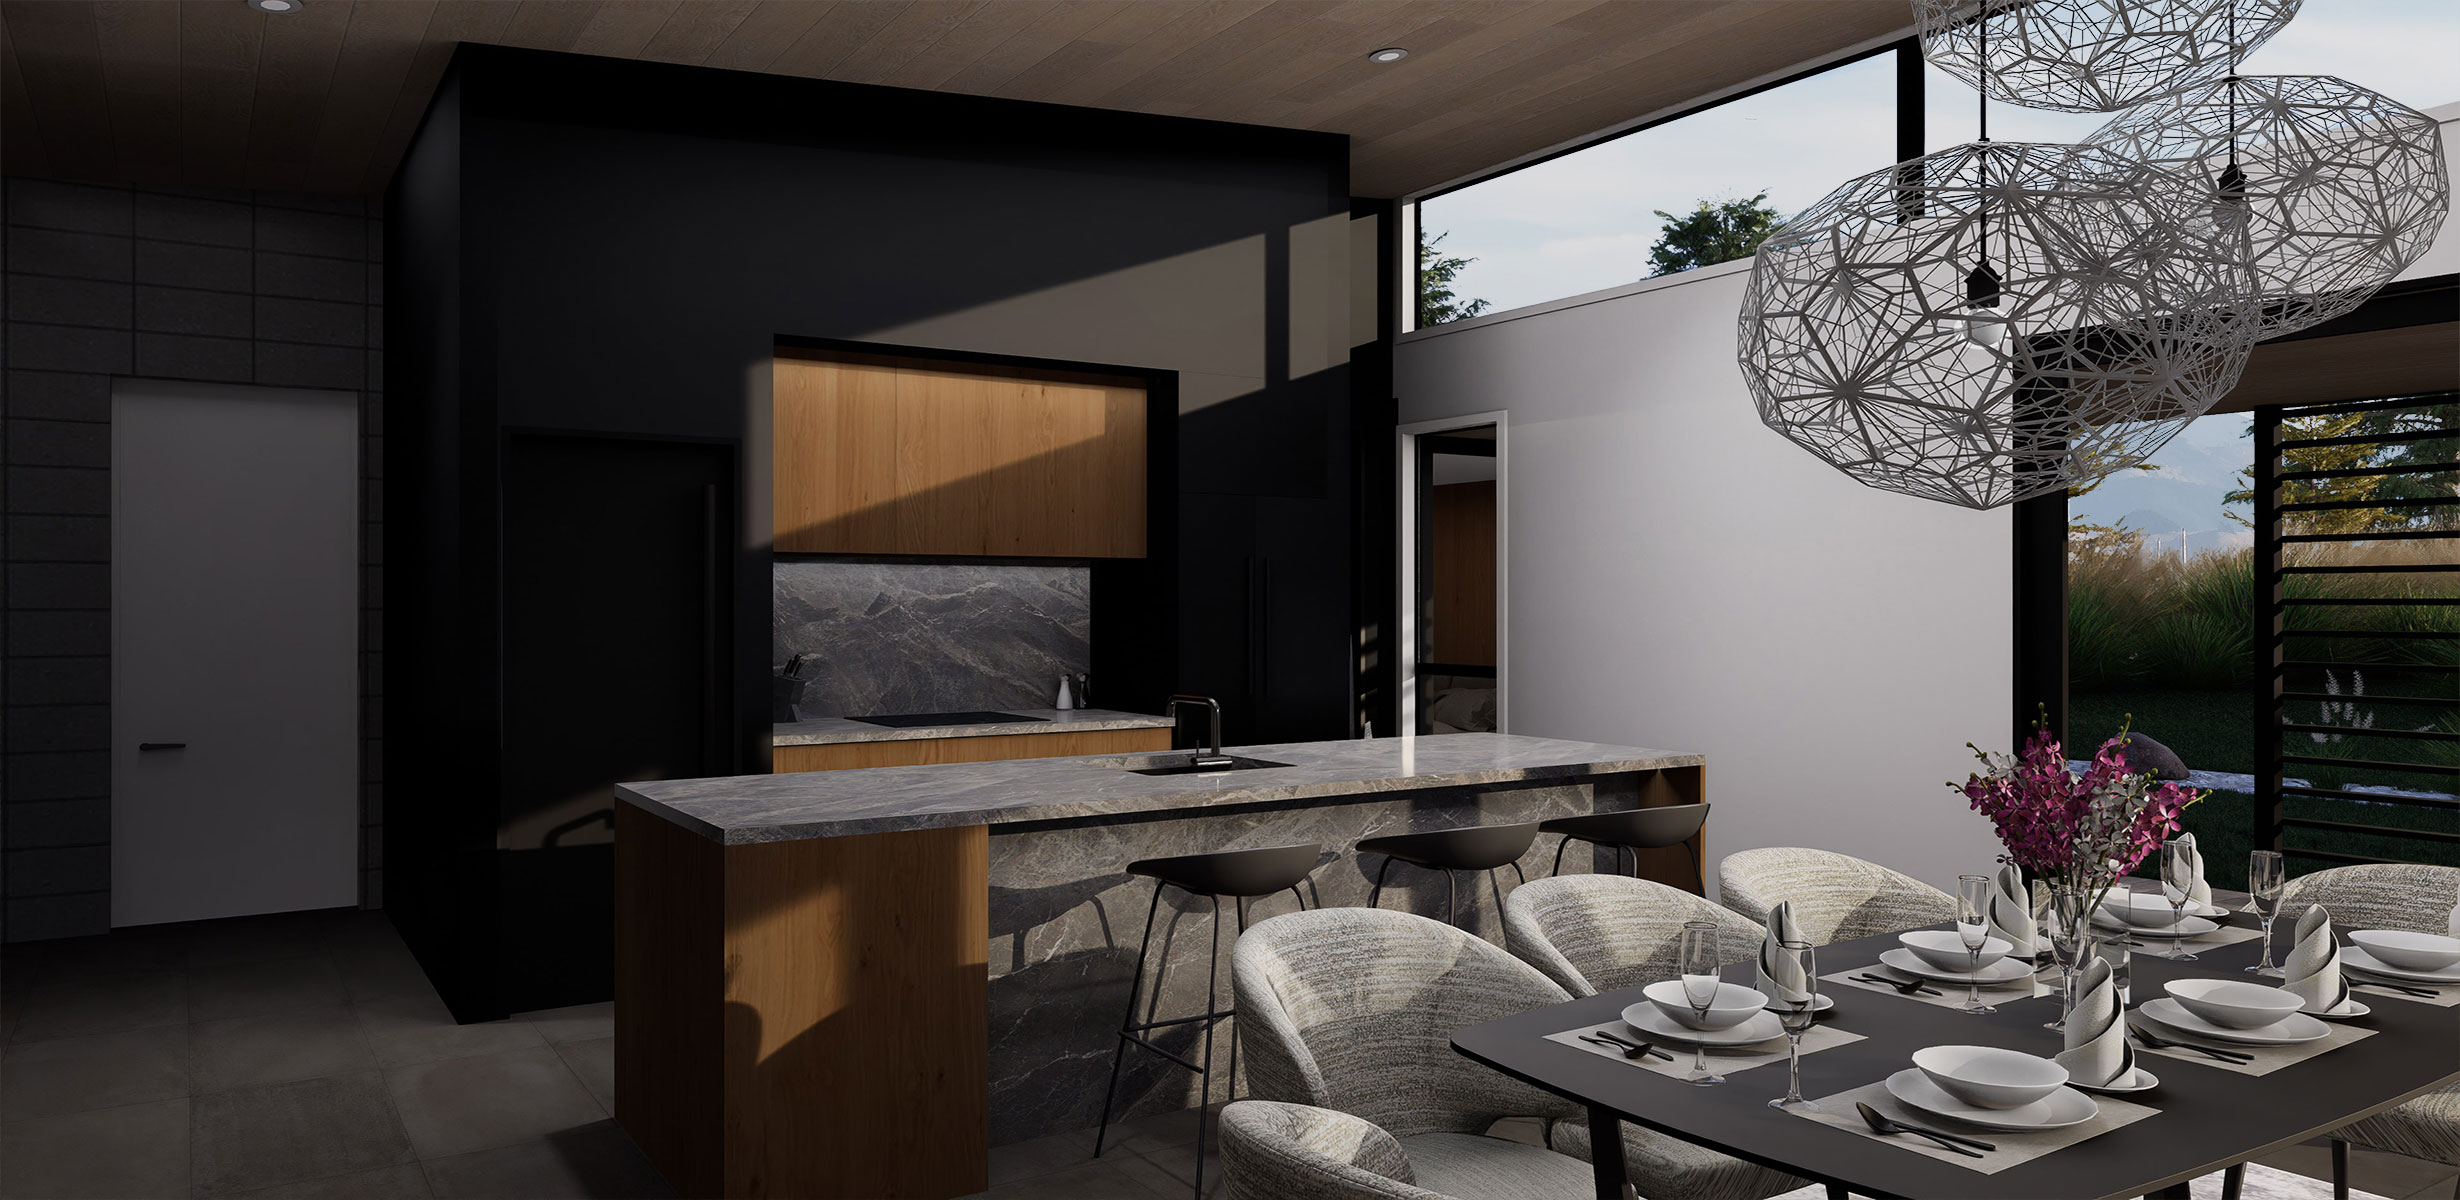 Hallmark Homes Prestige Series Mapua House Floor Plan Kitchen and Dining Room View Christchurch Builders NZ.